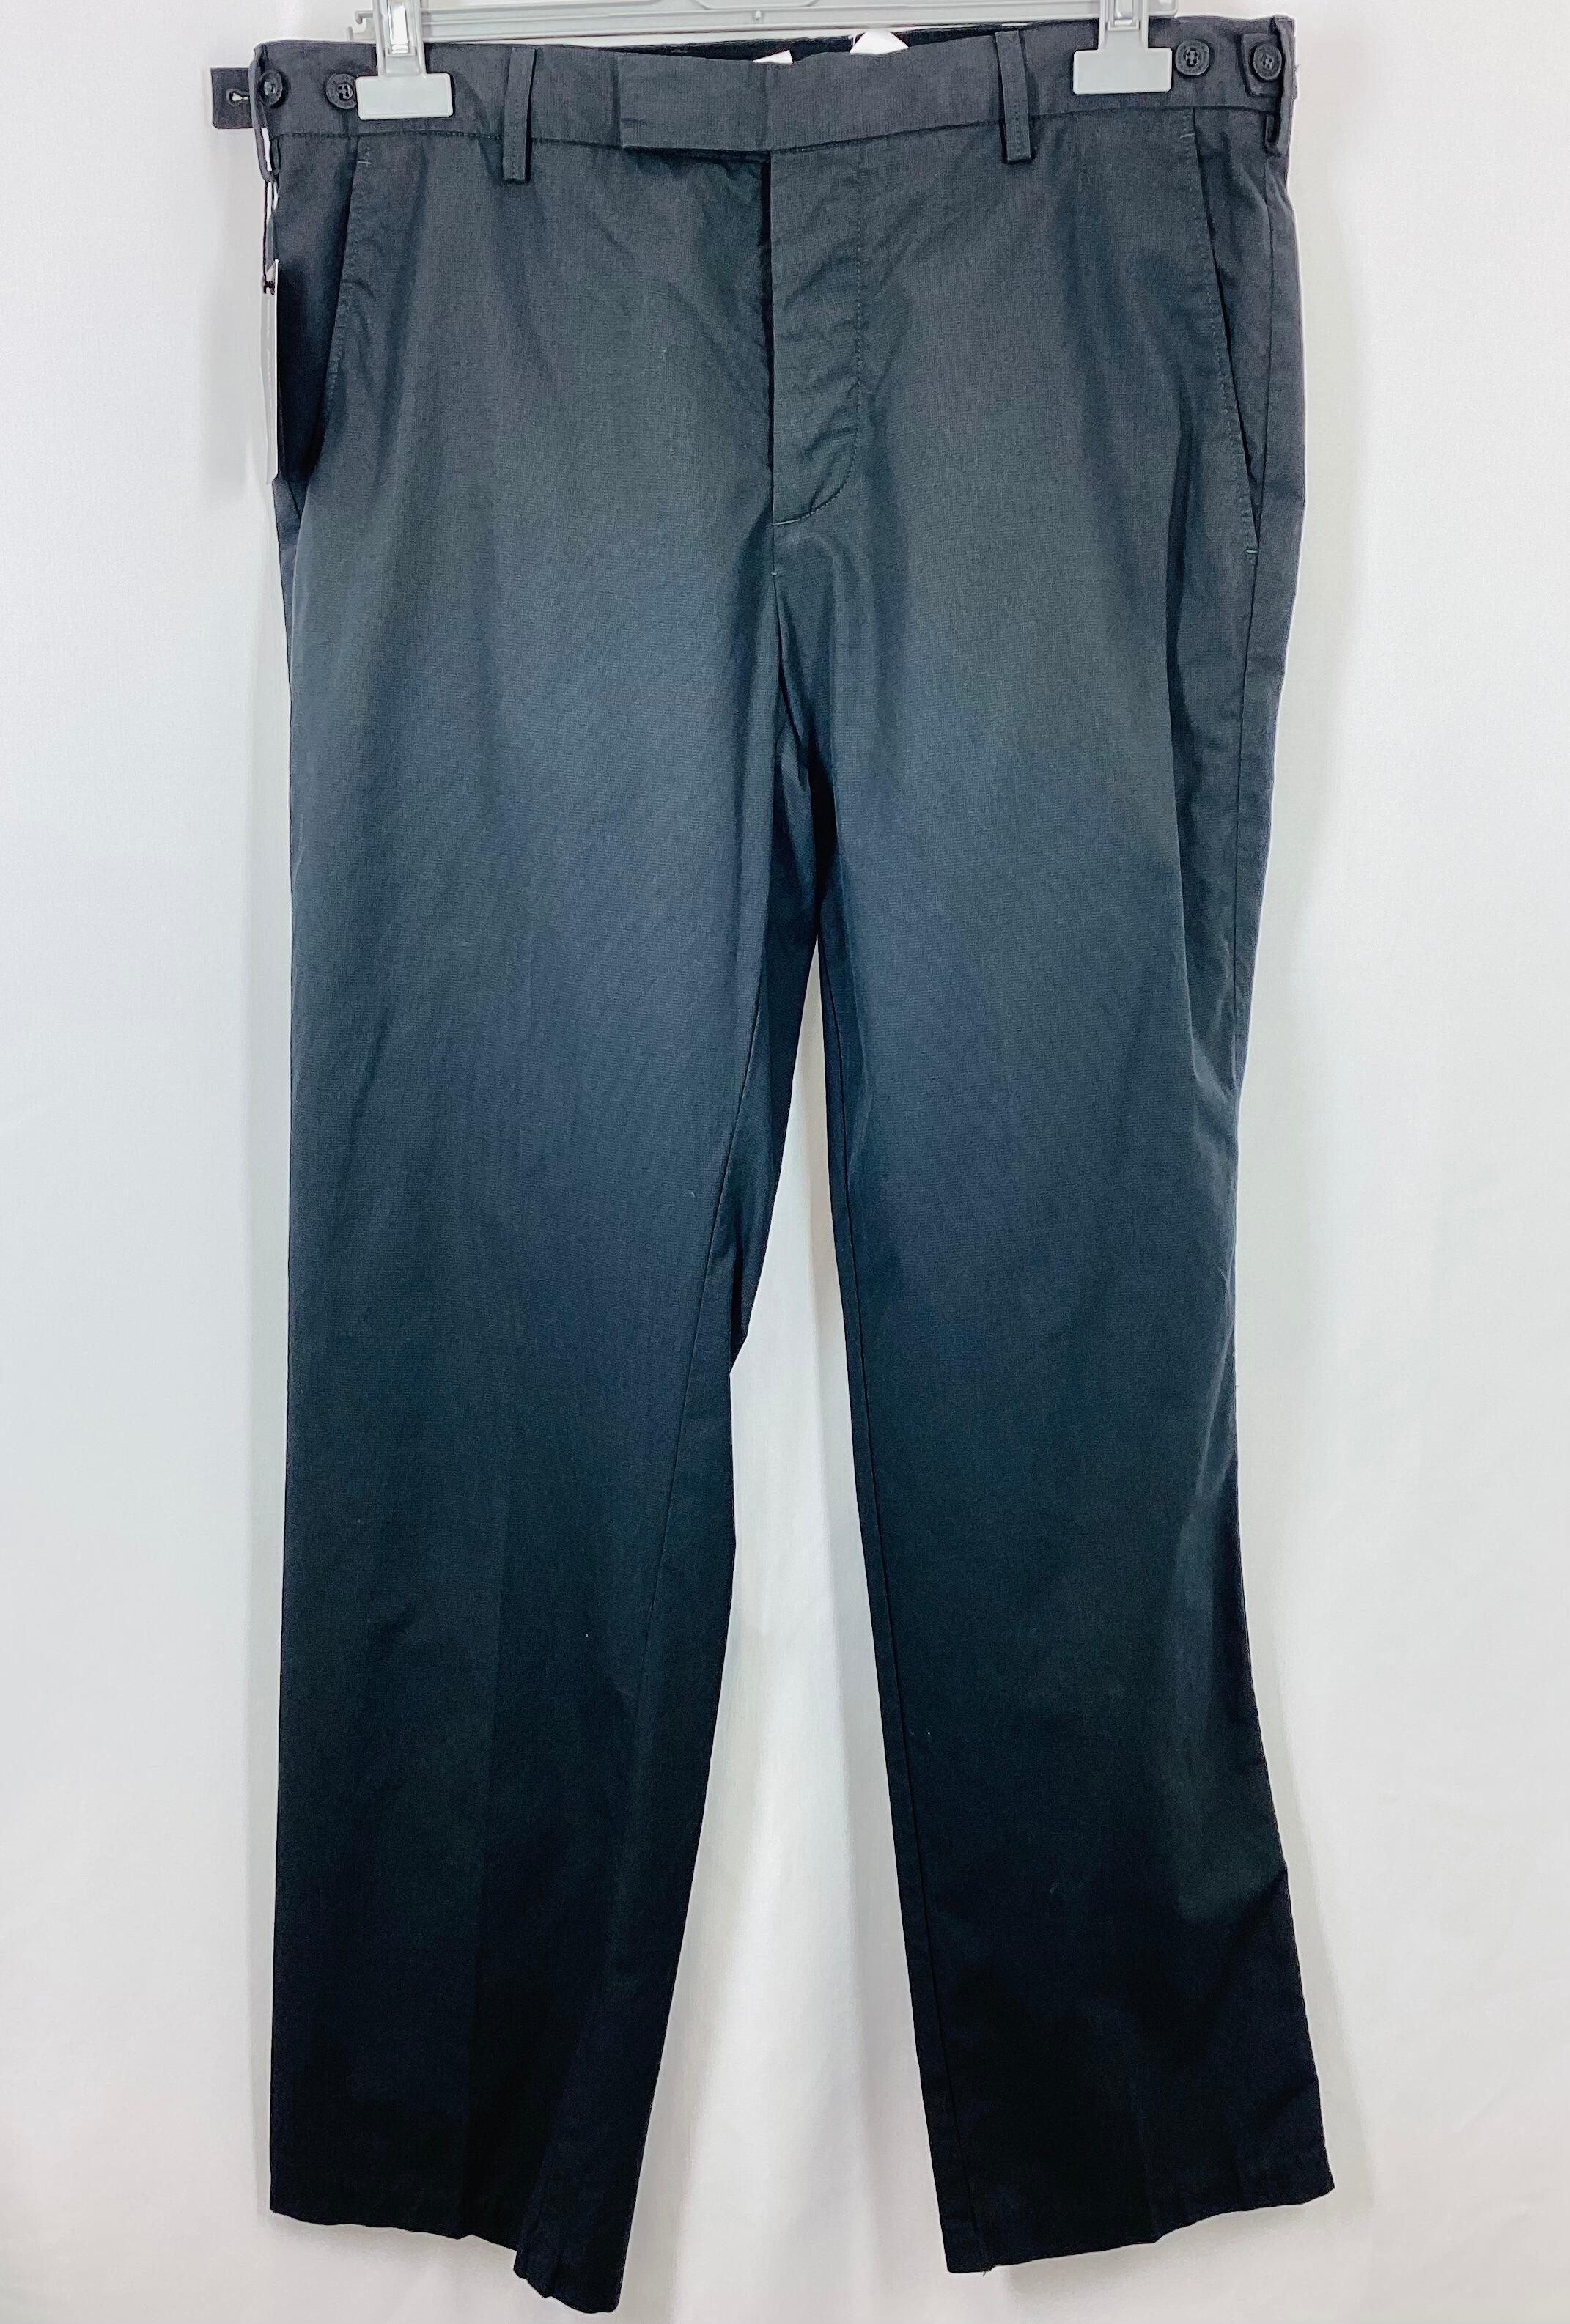 SHANYUR Men's casual pants Black Cargo Pants Men Hip Hop Pants Mens Autumn  Harem Pant Streetwear Harajuku Jogger Sweatpant Cotton Trousers Male Pants  (Color : Army Green, Size : X-LARGE) : Amazon.co.uk: